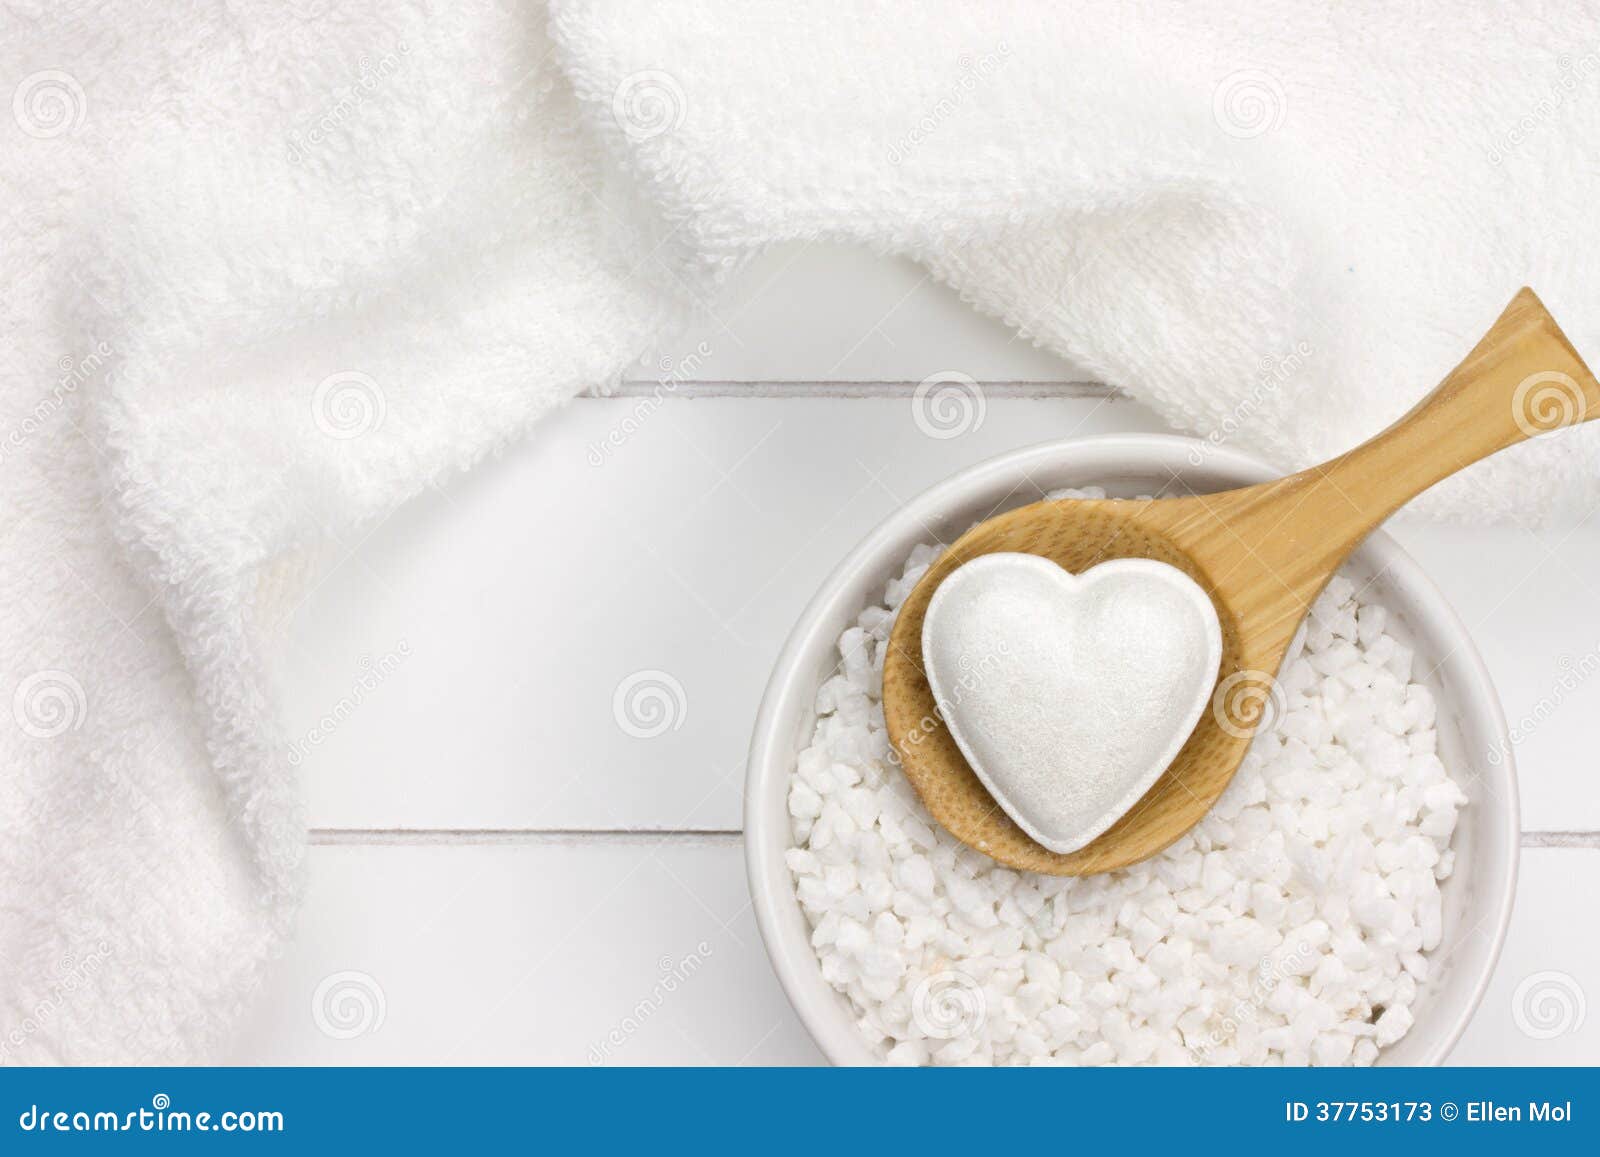 white wellness with bath salt, bath bomb and towel